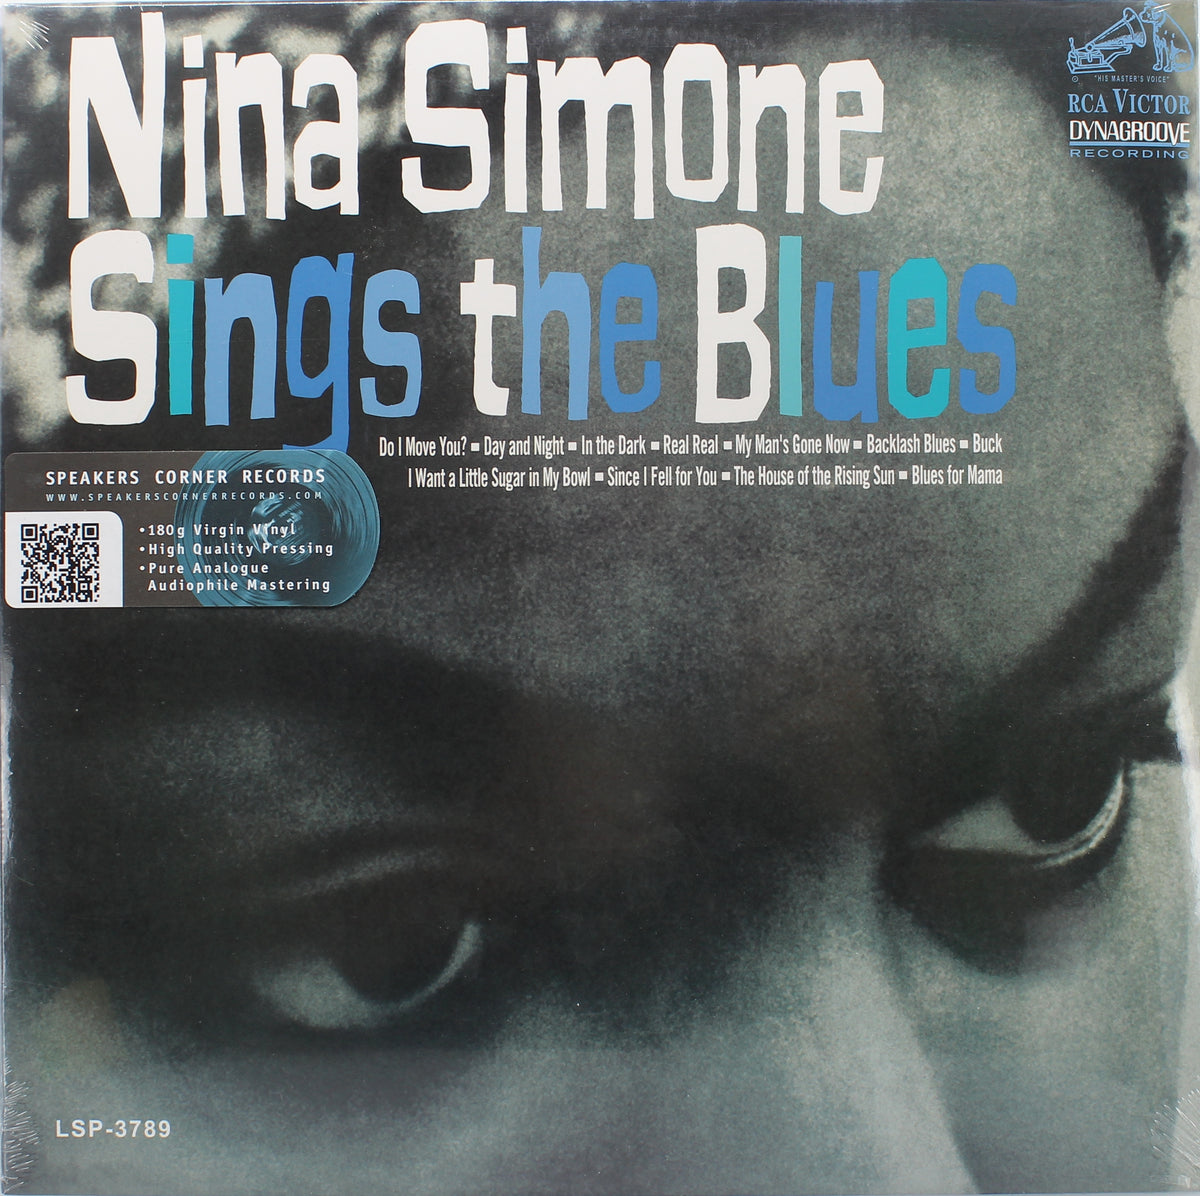 Nina Simone - Sings The Blues, Vinyl, LP, Album, Jazz, Blues, Germany